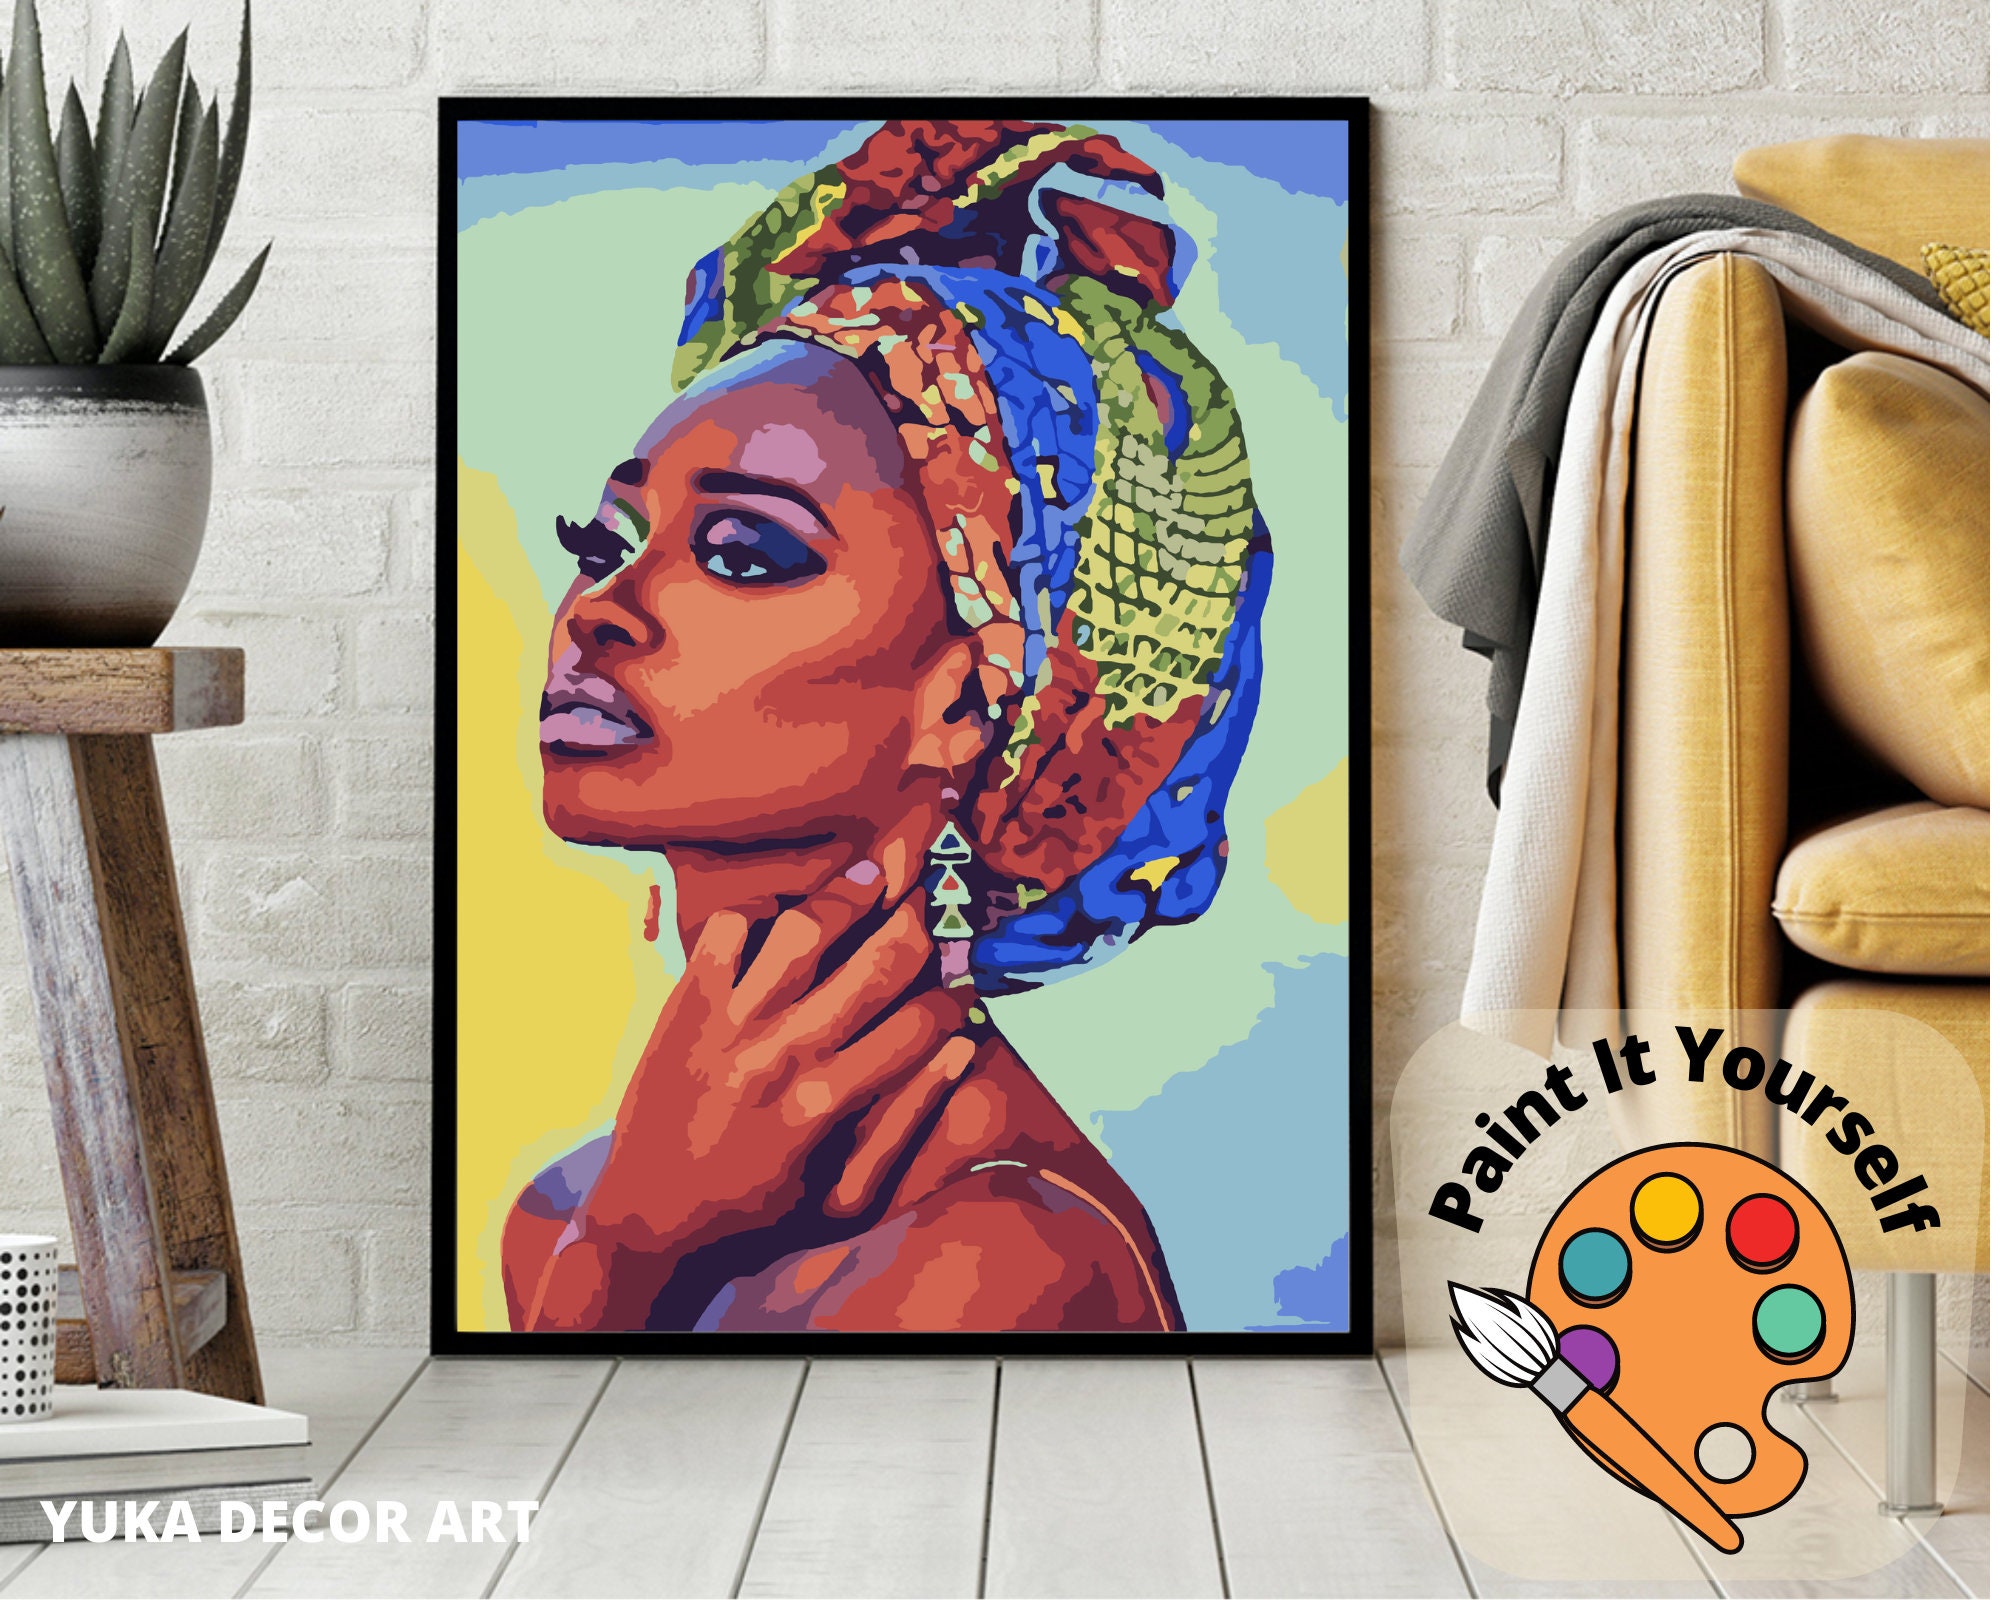 Peinture Par Numéro Peinture Par NuméRo Adulte Fille Africaine Art